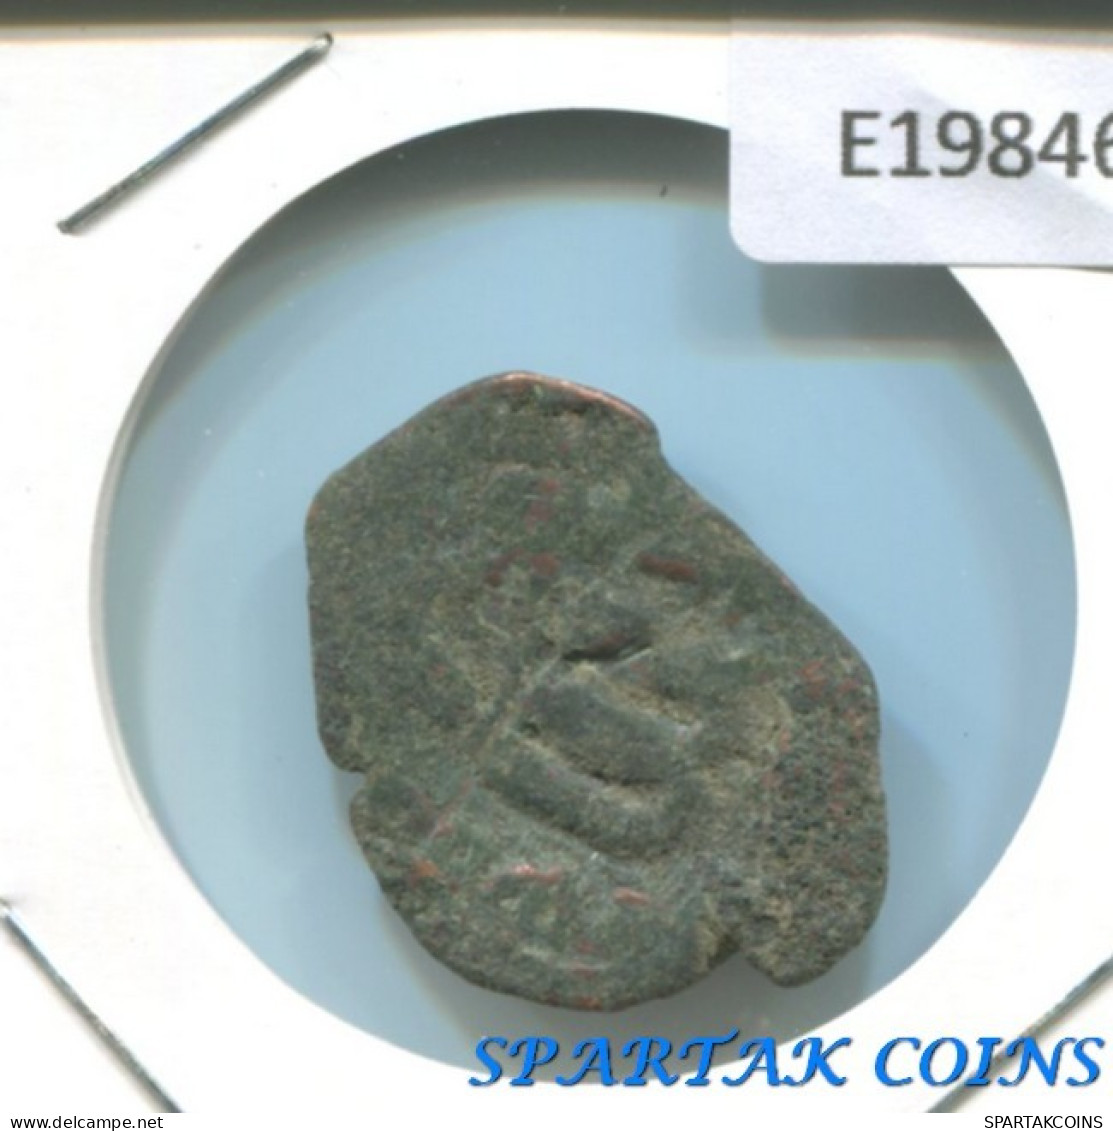 Authentic Original Ancient BYZANTINE EMPIRE Coin #E19846.4.U.A - Byzantines